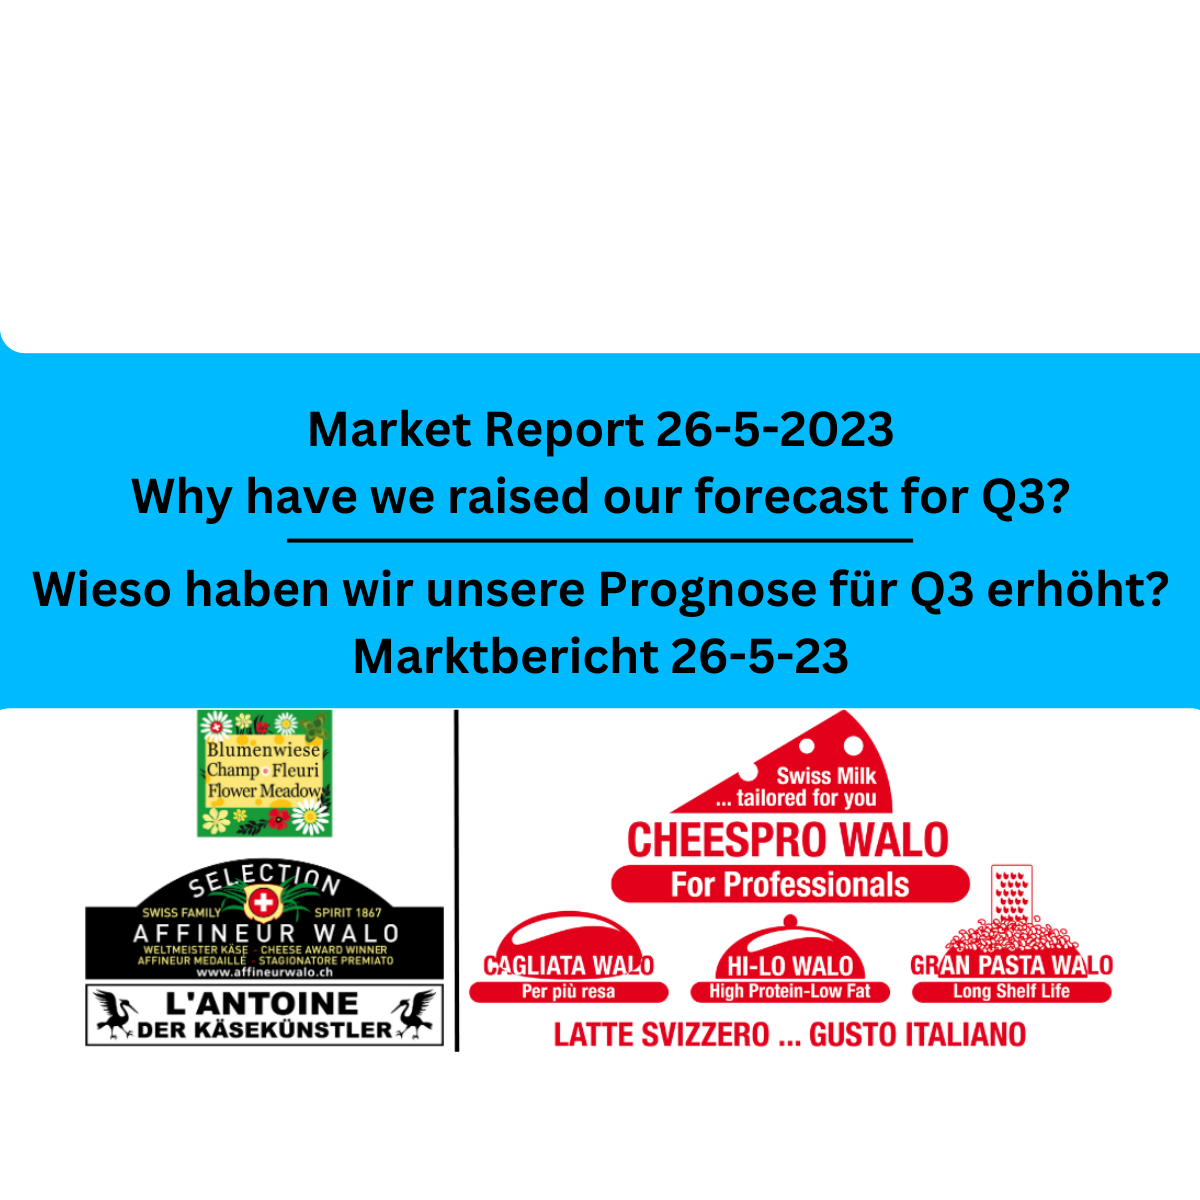 Market Report 26-5-23, Marktbericht 26-5-23